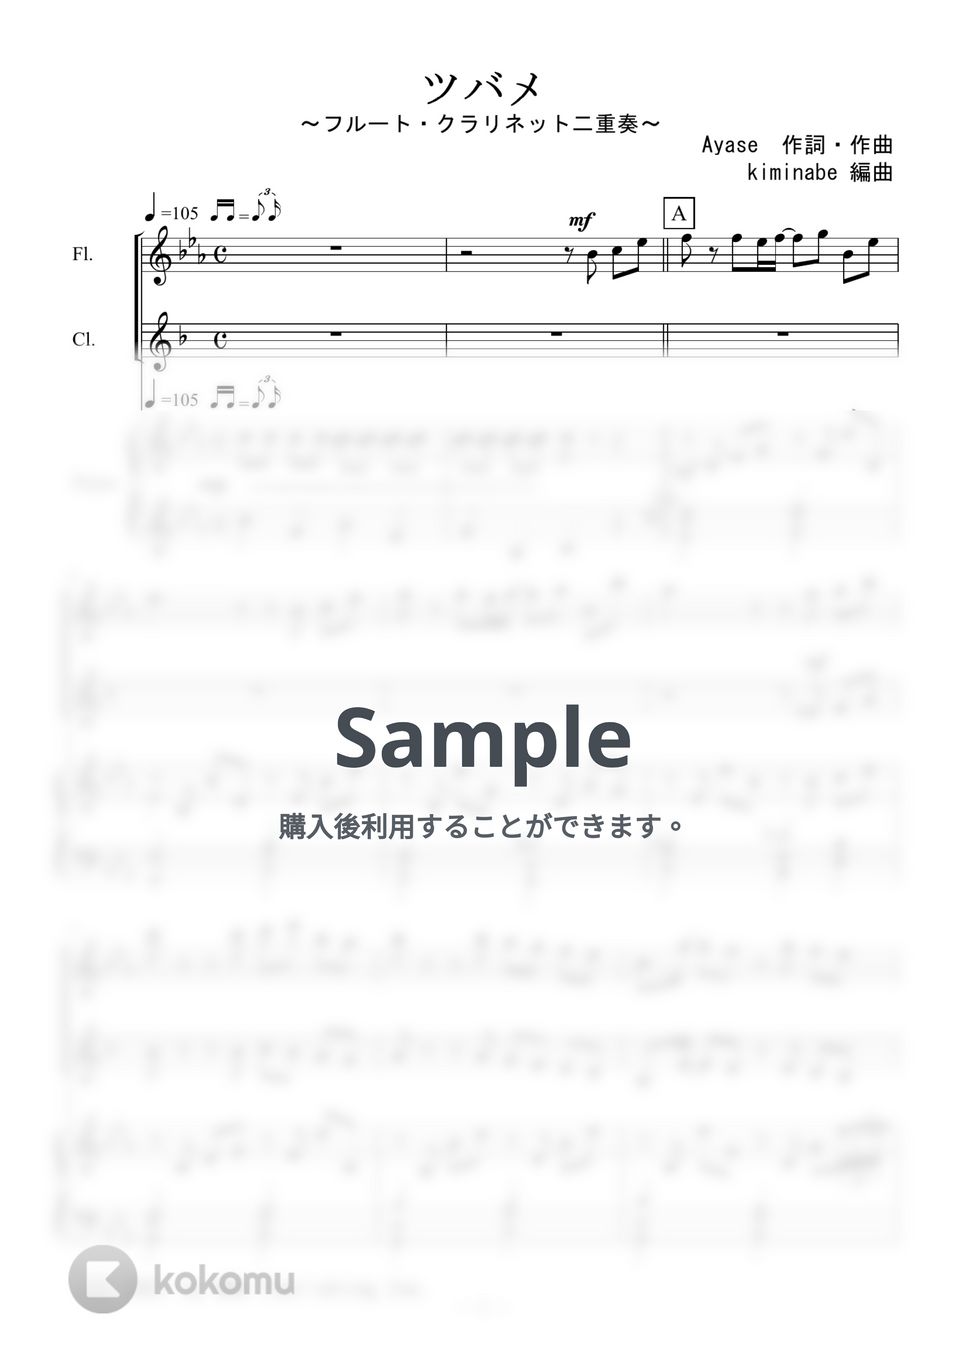 YOASOBI - ツバメ (フルート・クラリネット二重奏) by kiminabe